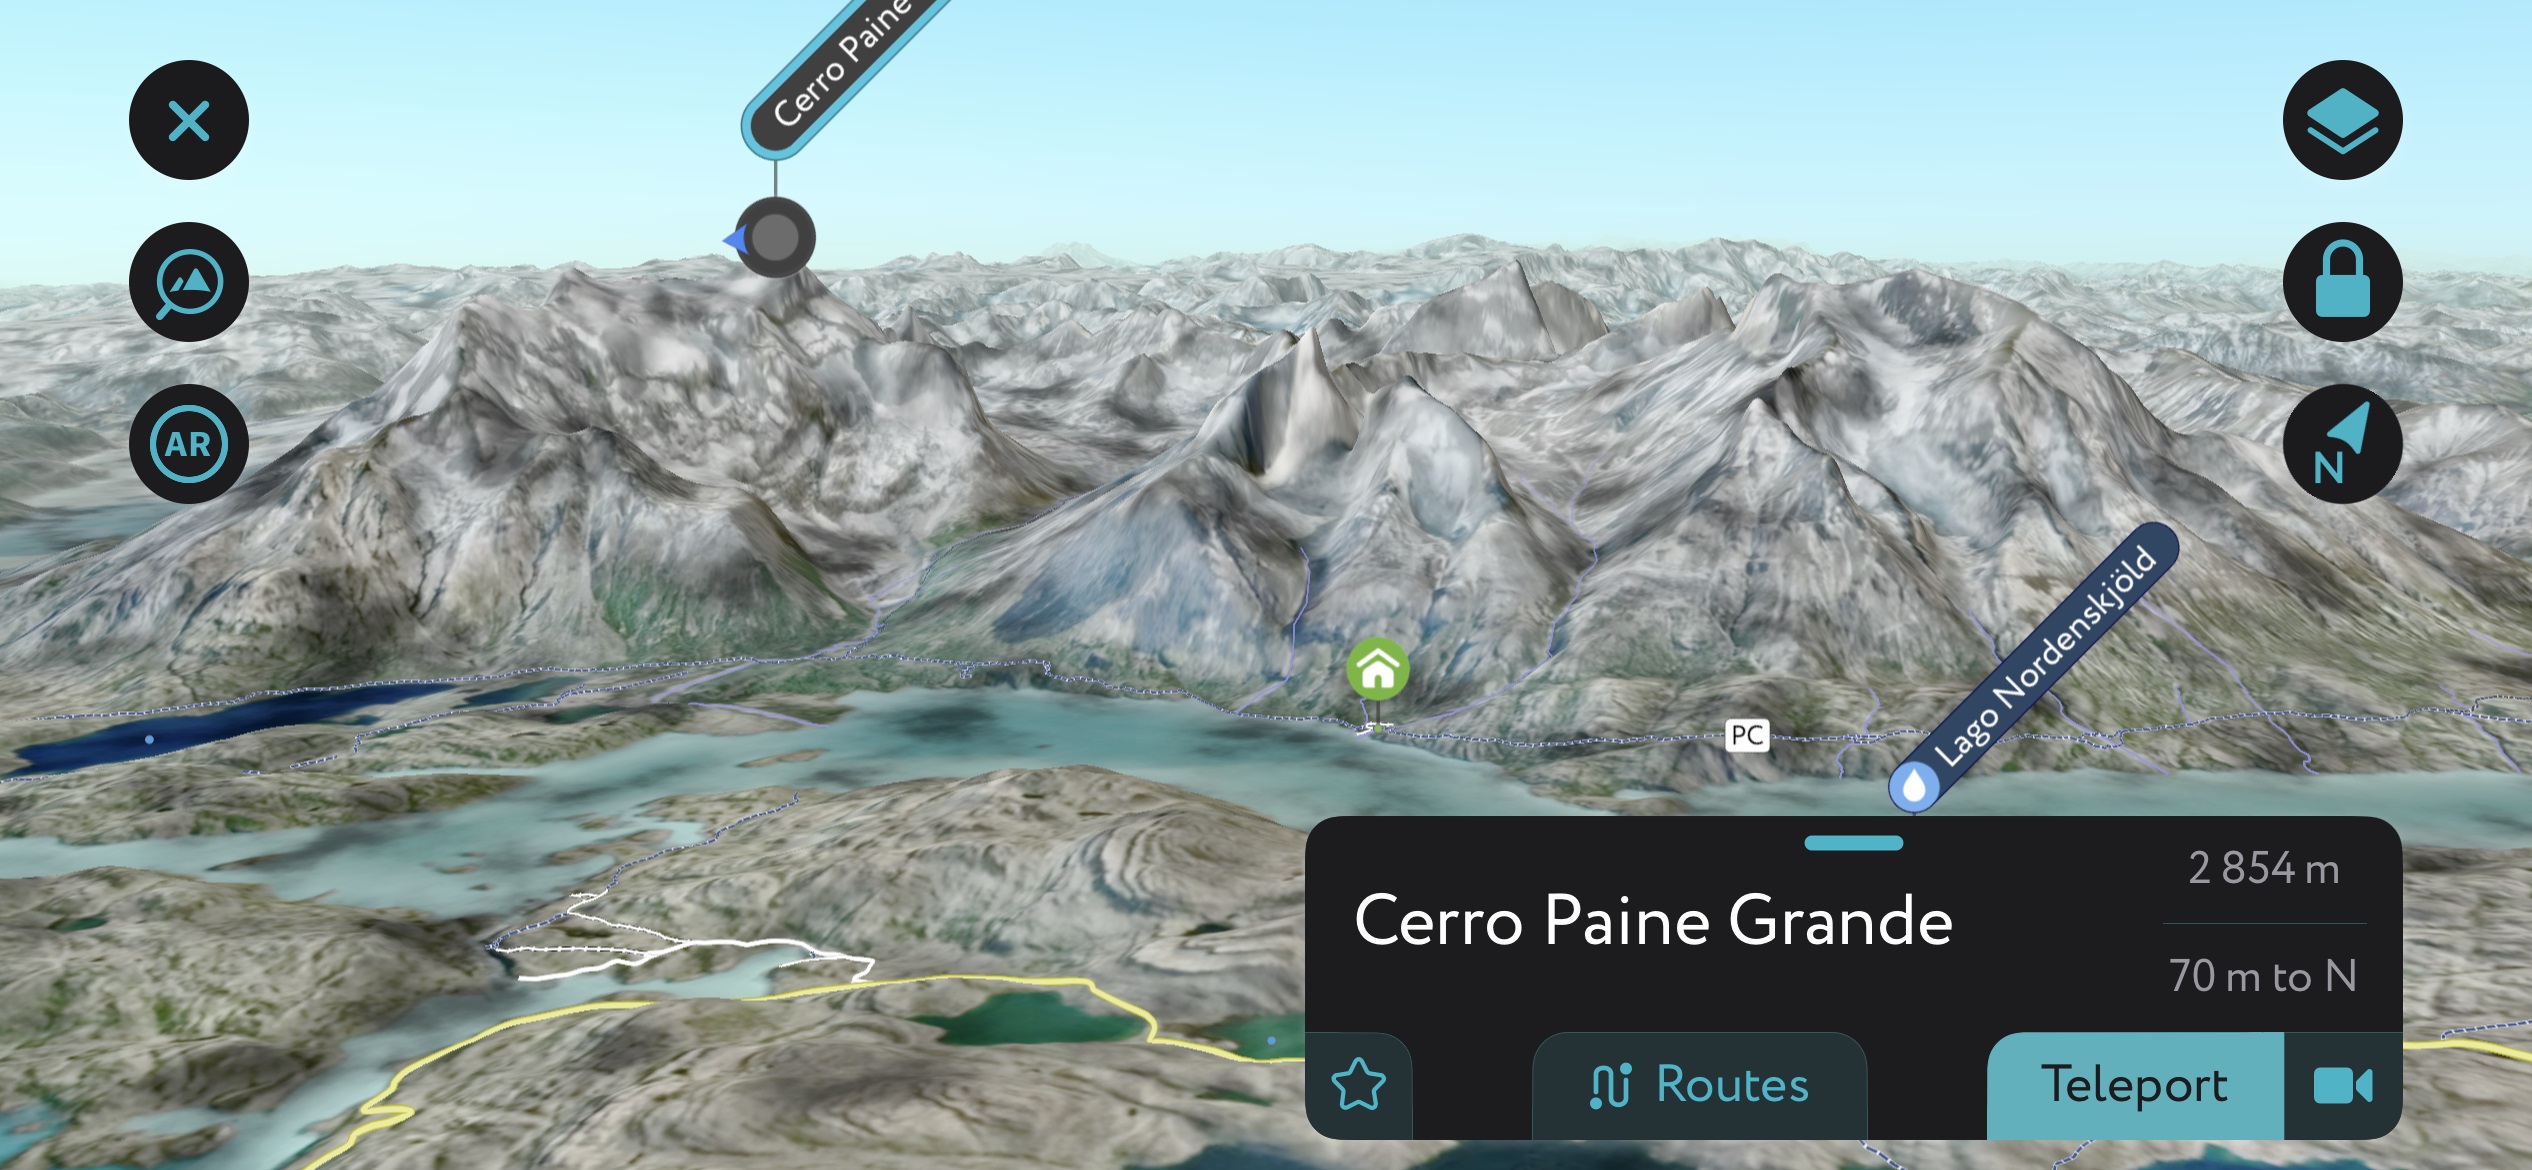 Best hiking. A generation of Torres del Paine NP using PeakVisor’s mobile app